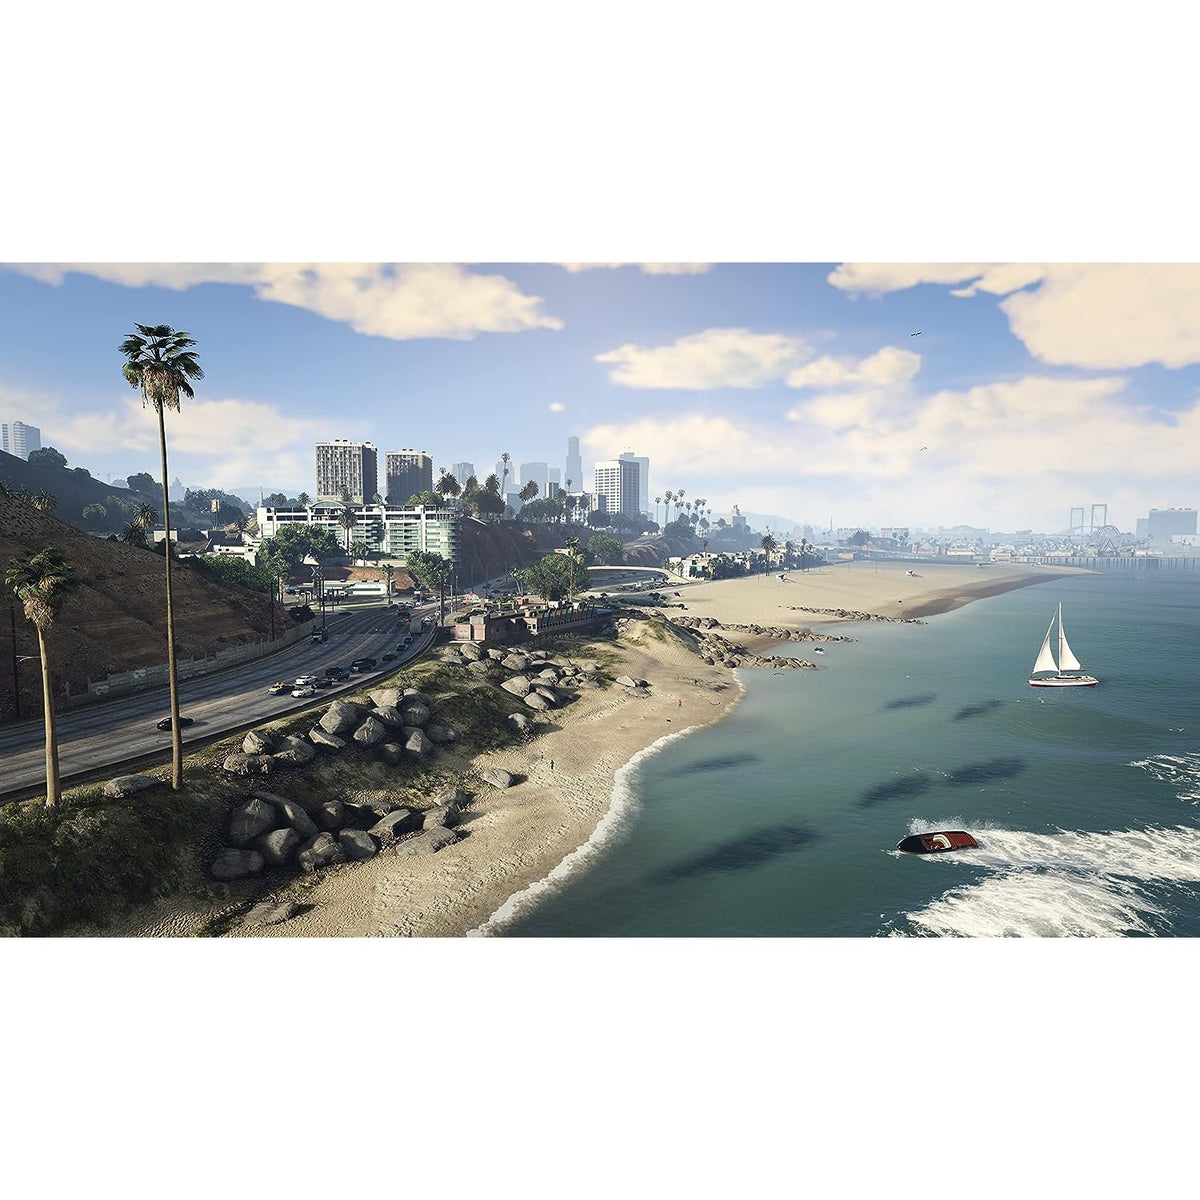 Grand Theft Auto V Xbox Series X